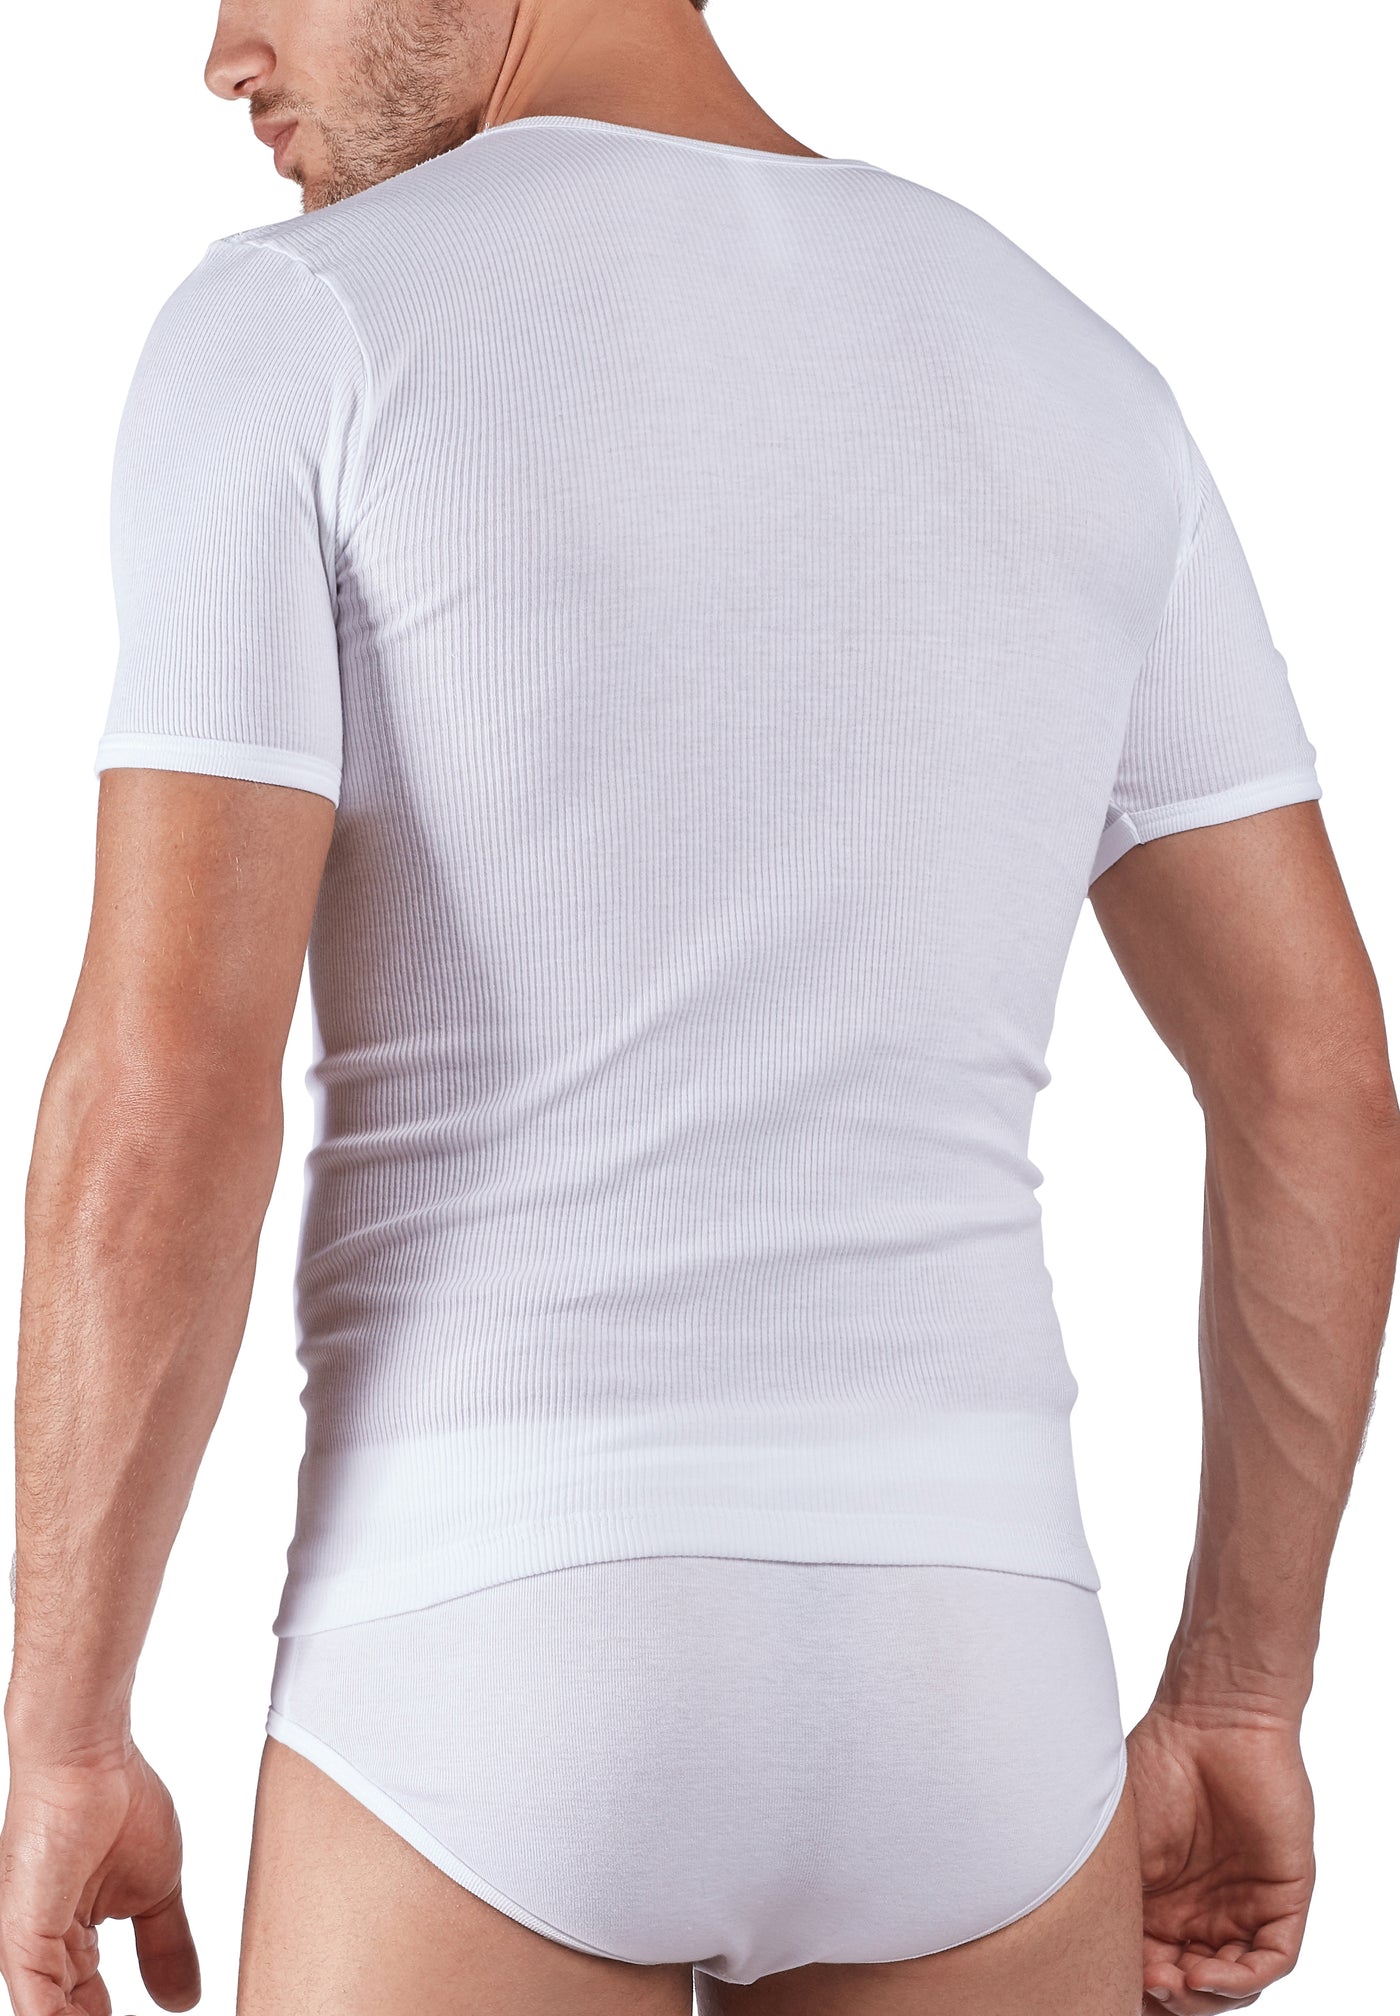 HUBER hautnah - Cotton Fine Rib - Shirt1/2 2 Pack